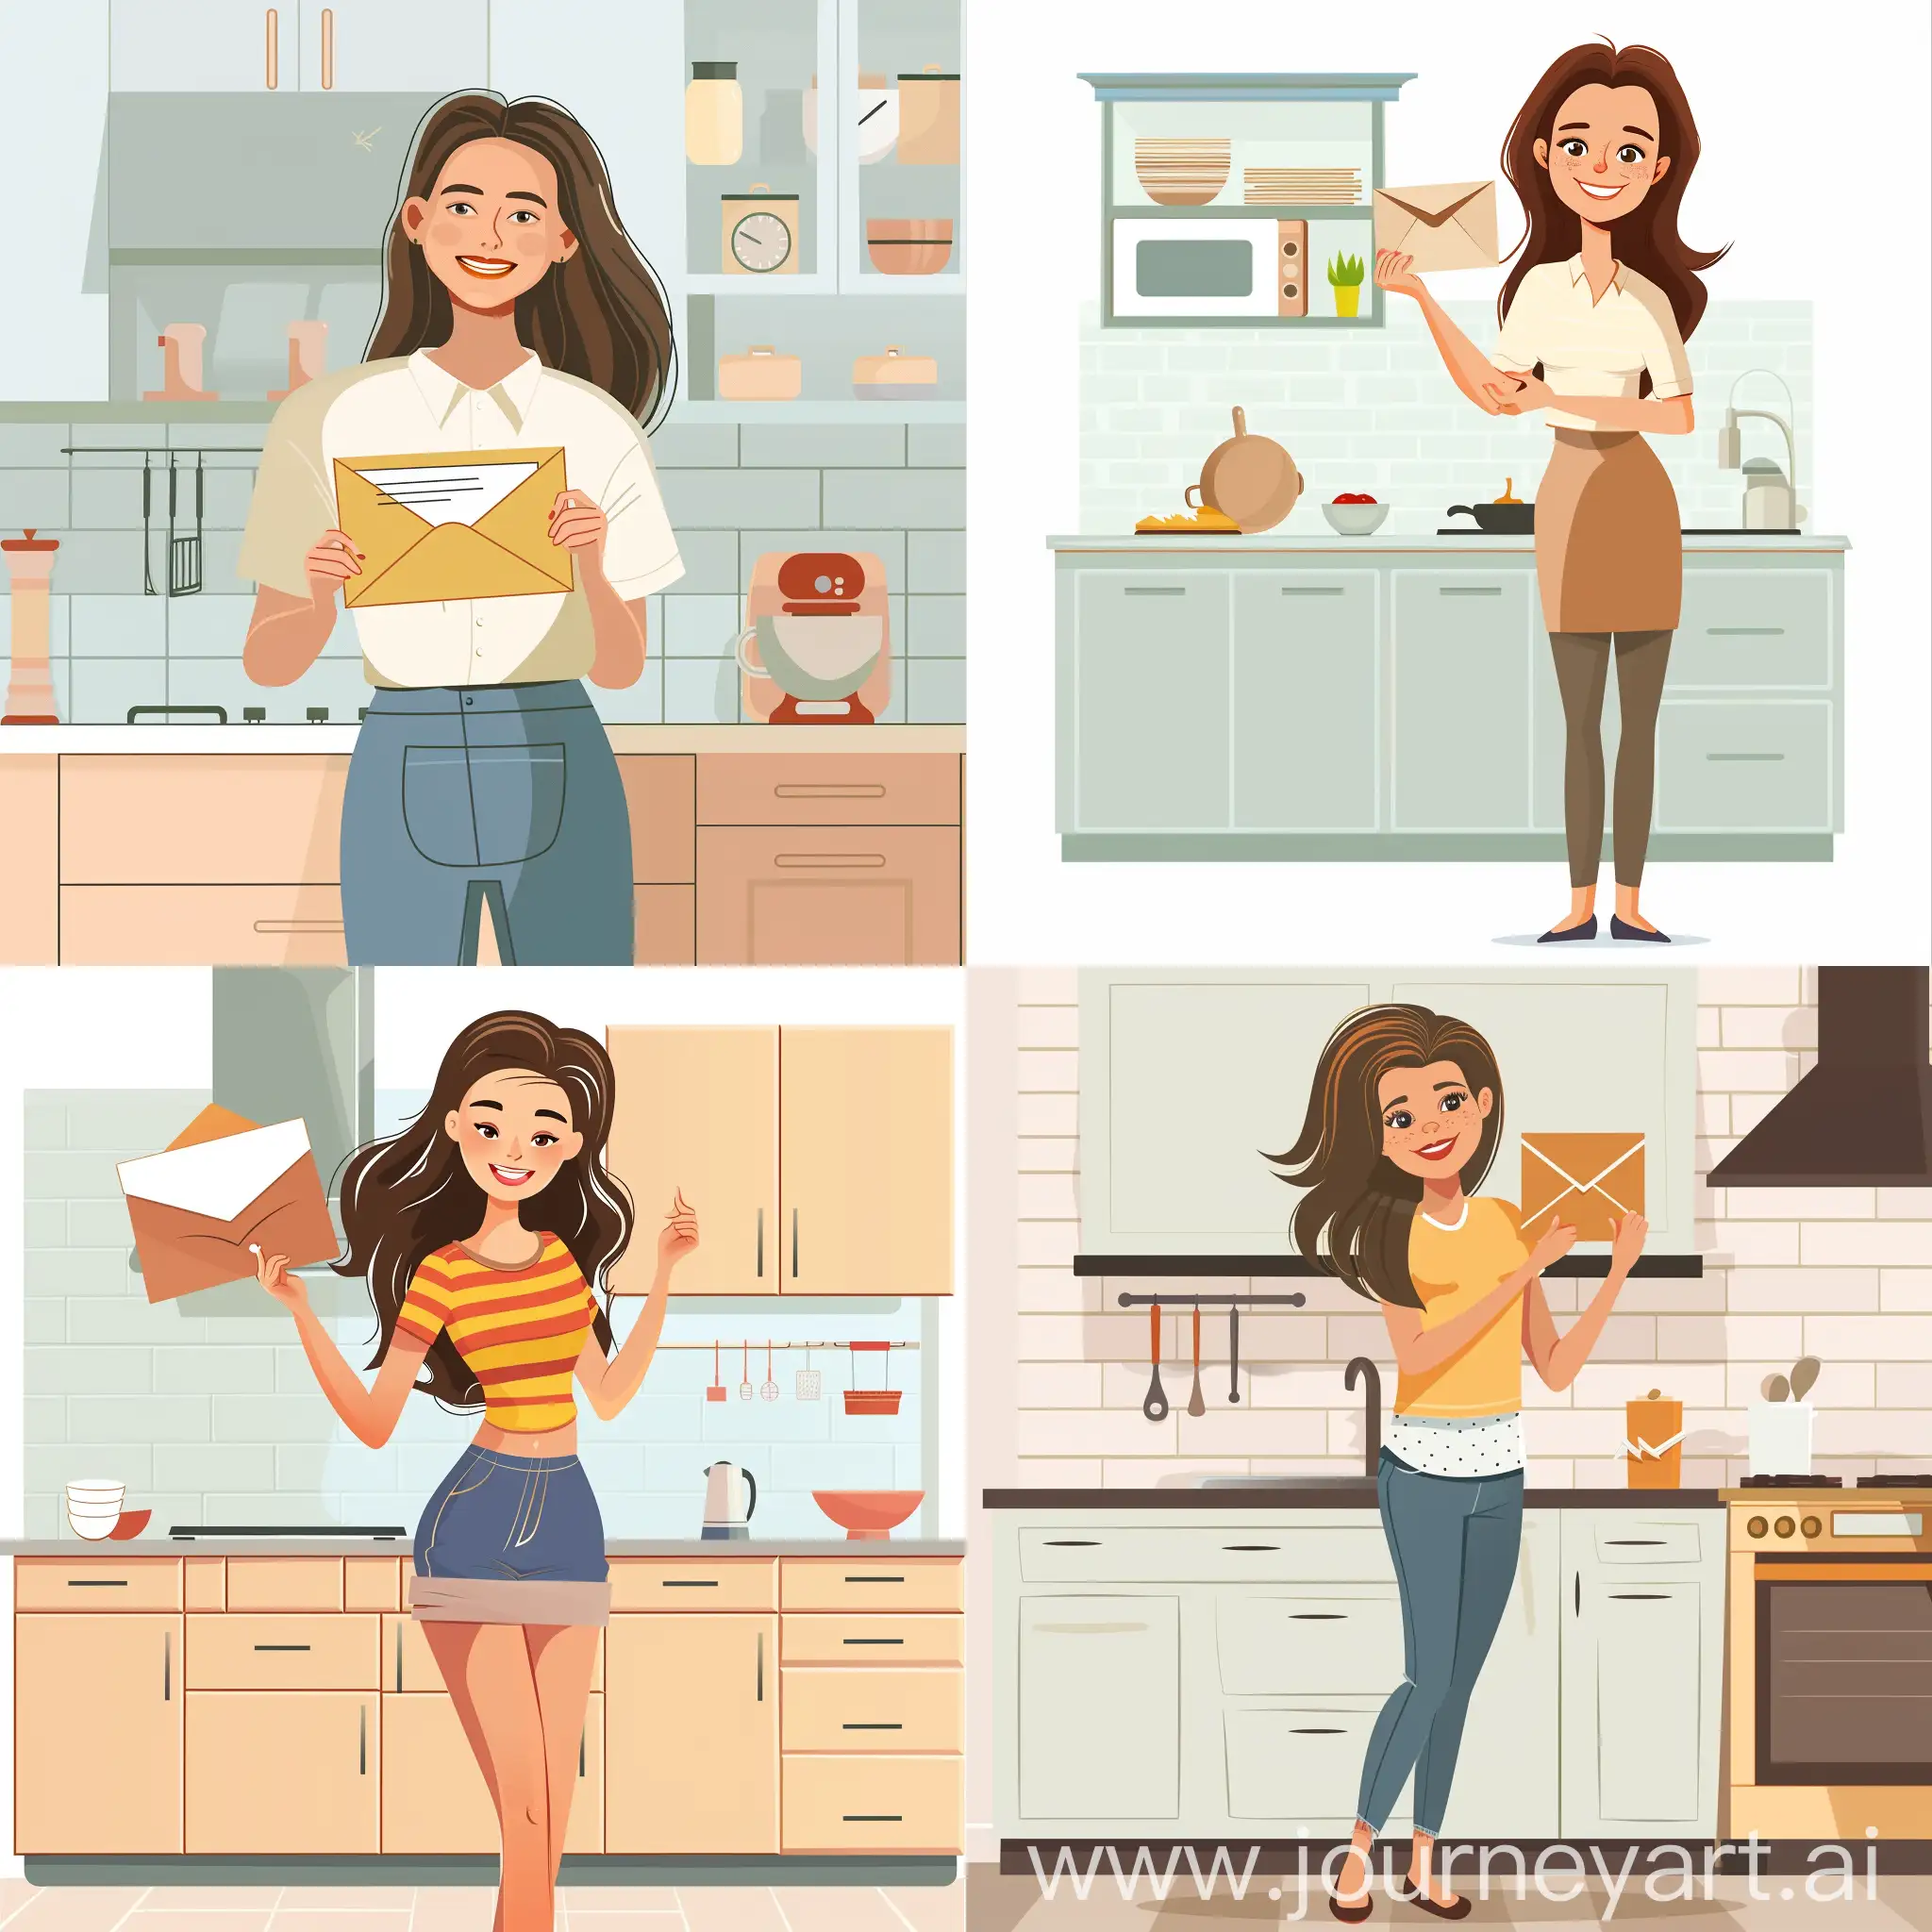 Joyful-Woman-with-White-Envelope-in-Kitchen